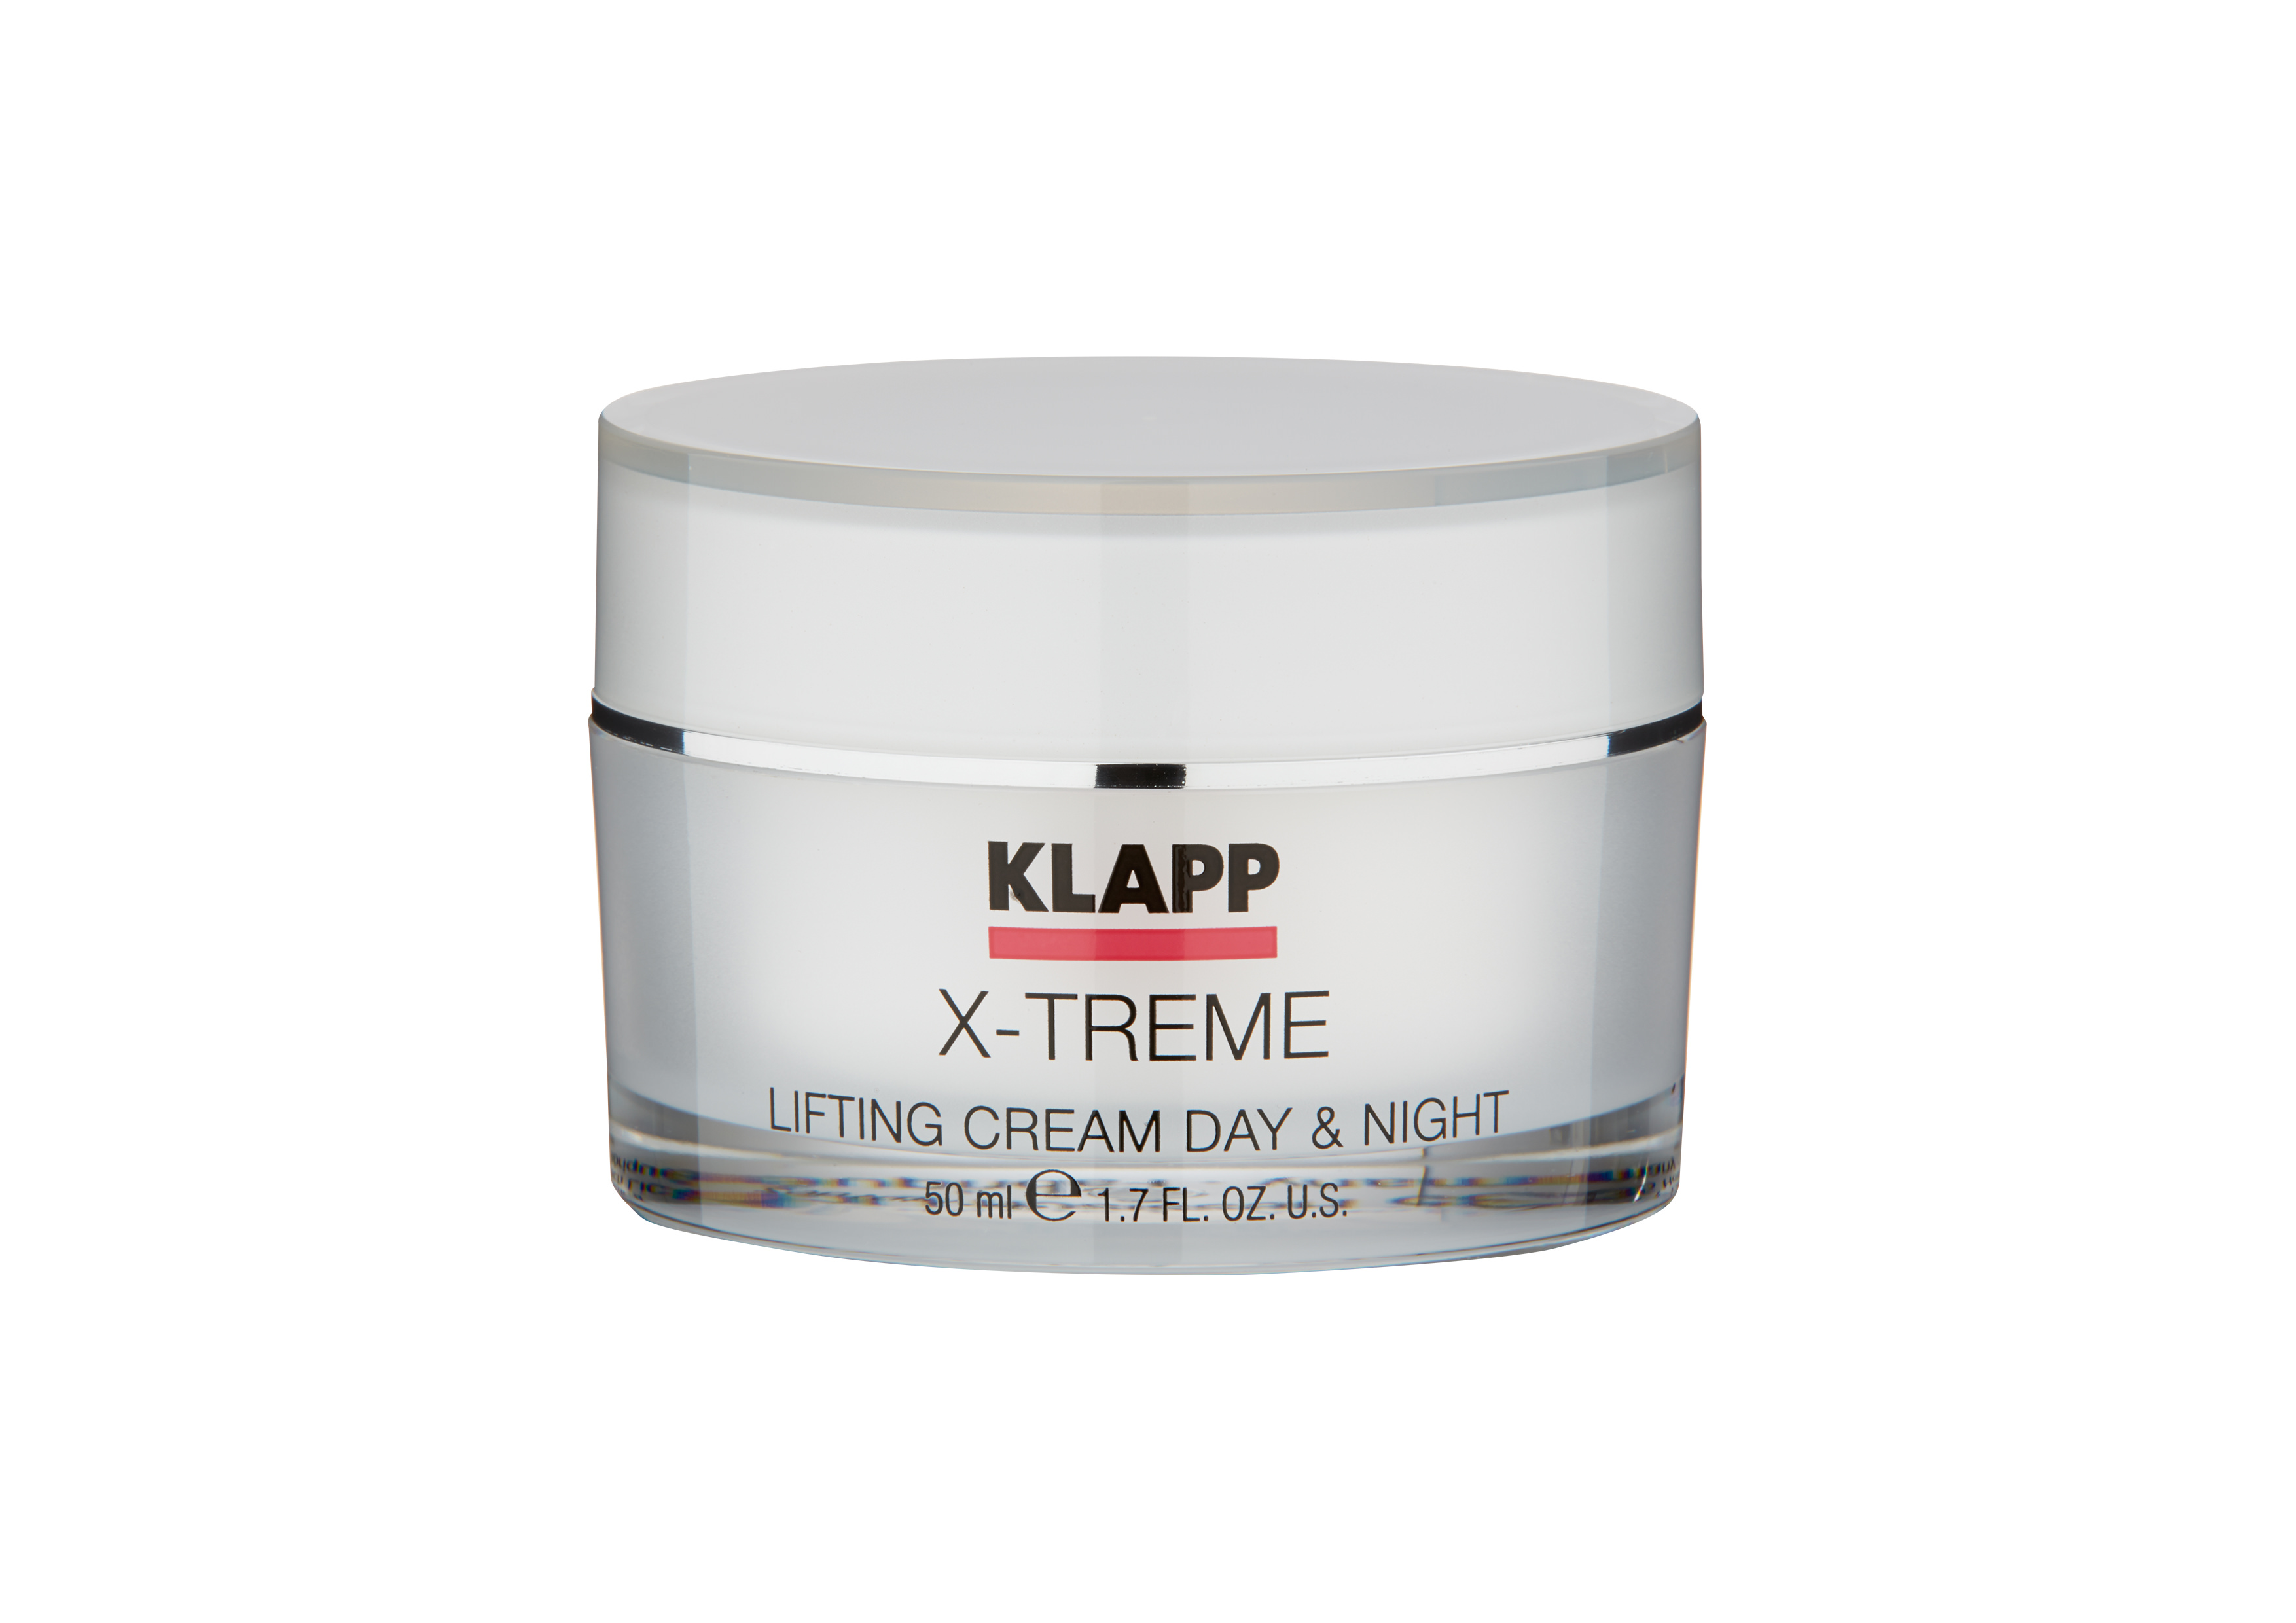 Klapp X-treme Lifting Cream Day & Night